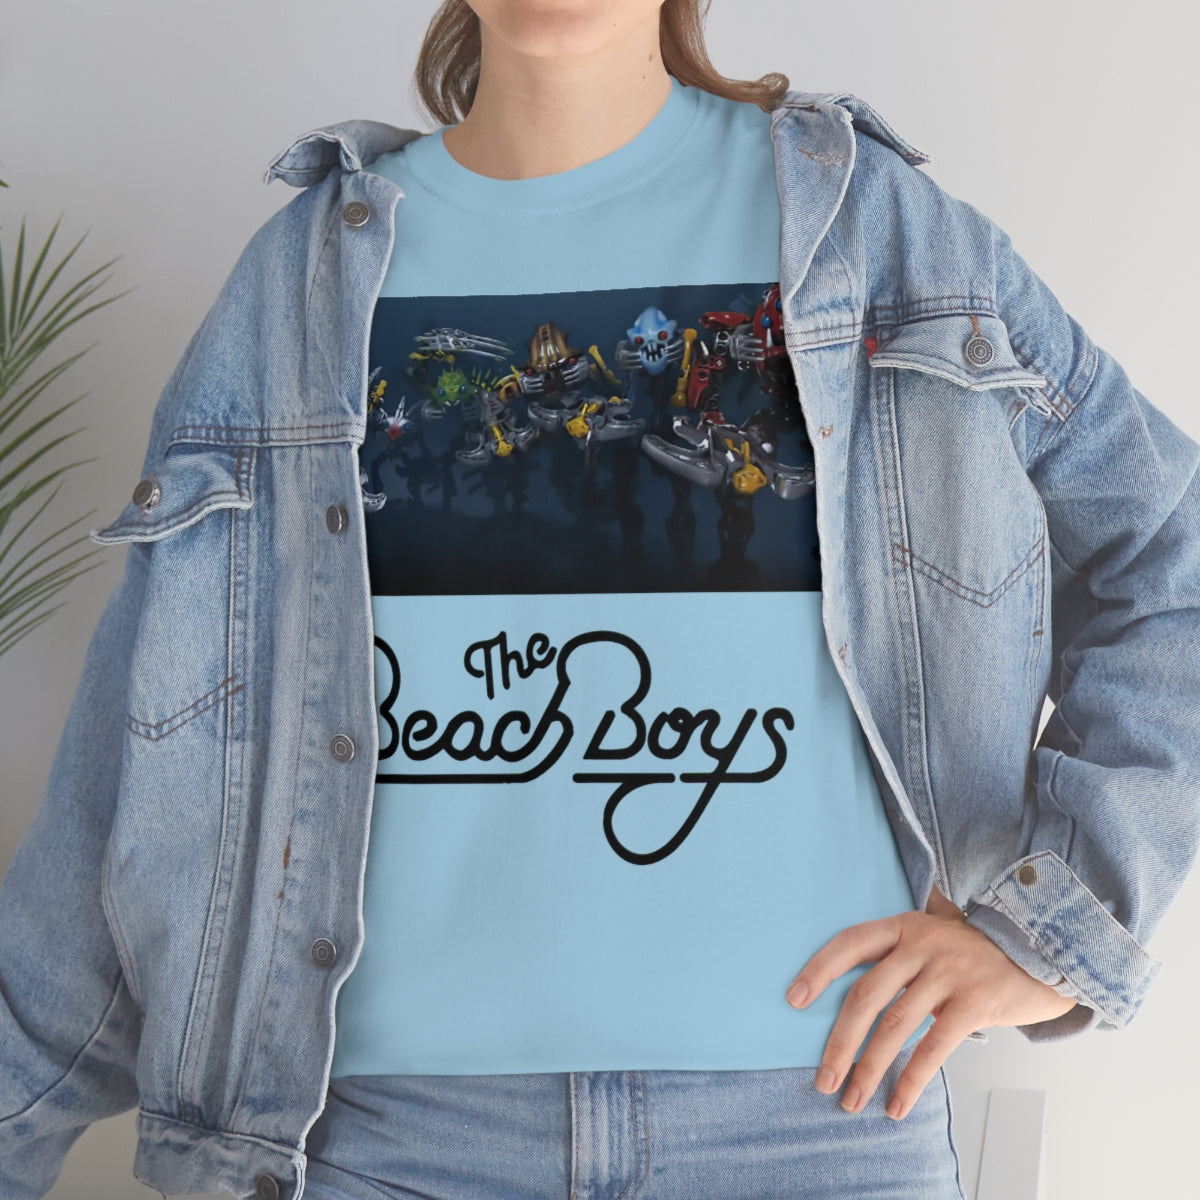 Bionicle Beach Boys Shirt